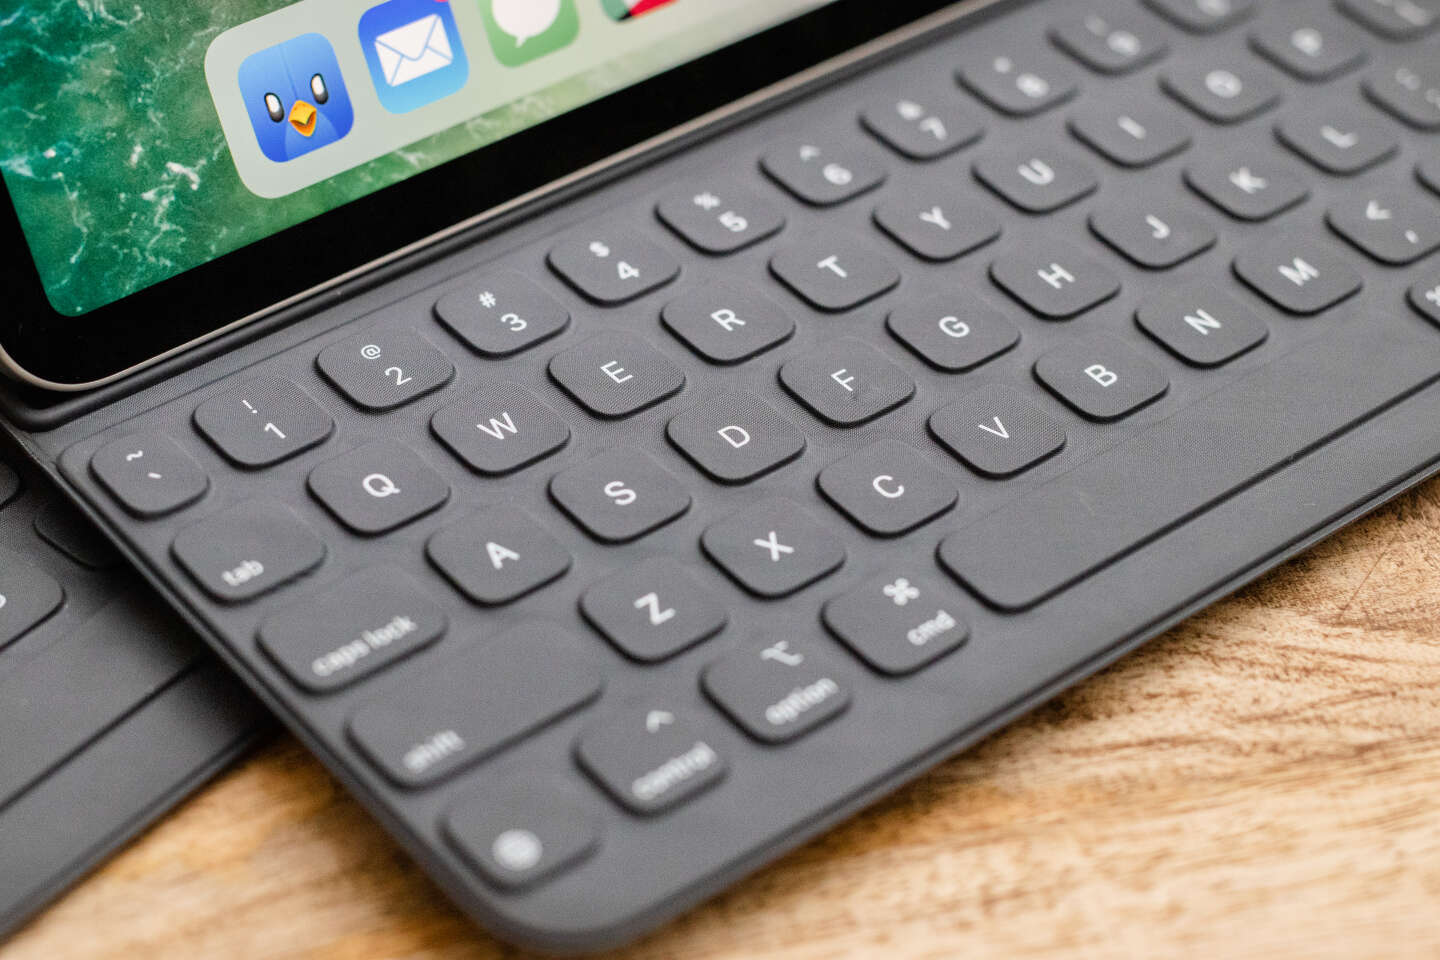 Installer et utiliser le Magic Keyboard pour iPad - Assistance Apple (FR)